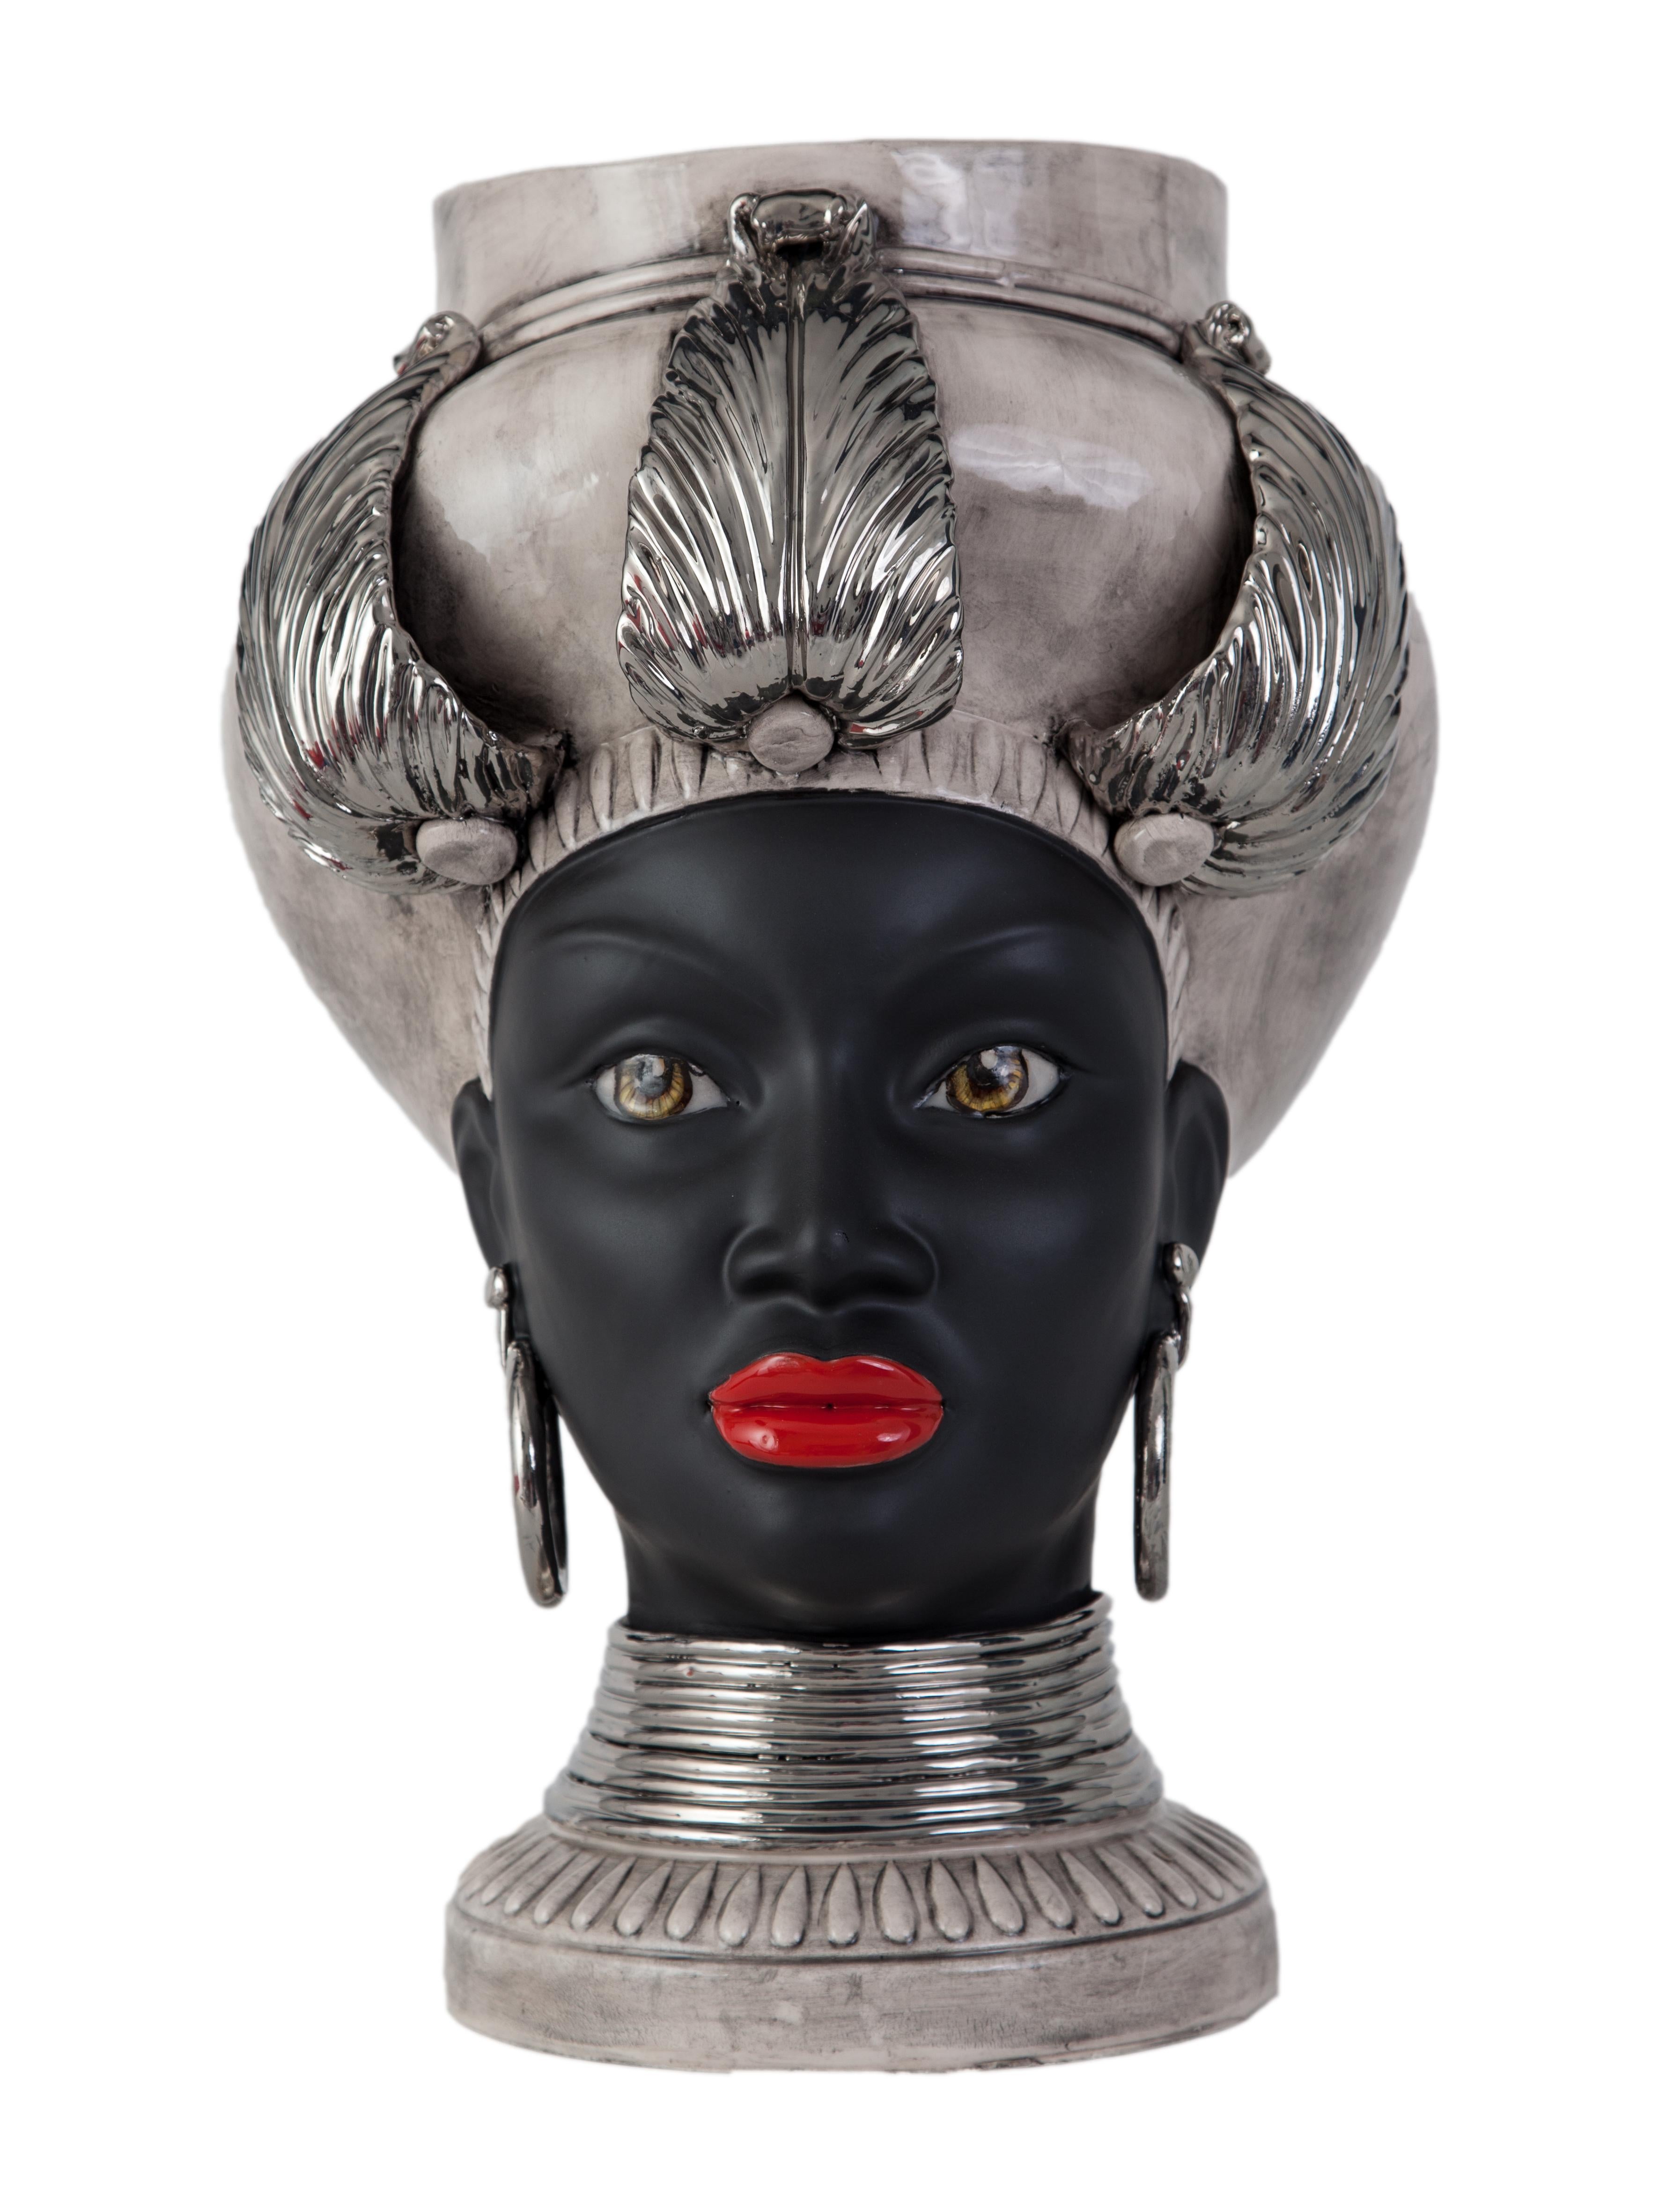 ISIDE I12, Man's Moorish Head, Handmade in Sicily, 2021, Centerpiece, Size S For Sale 11